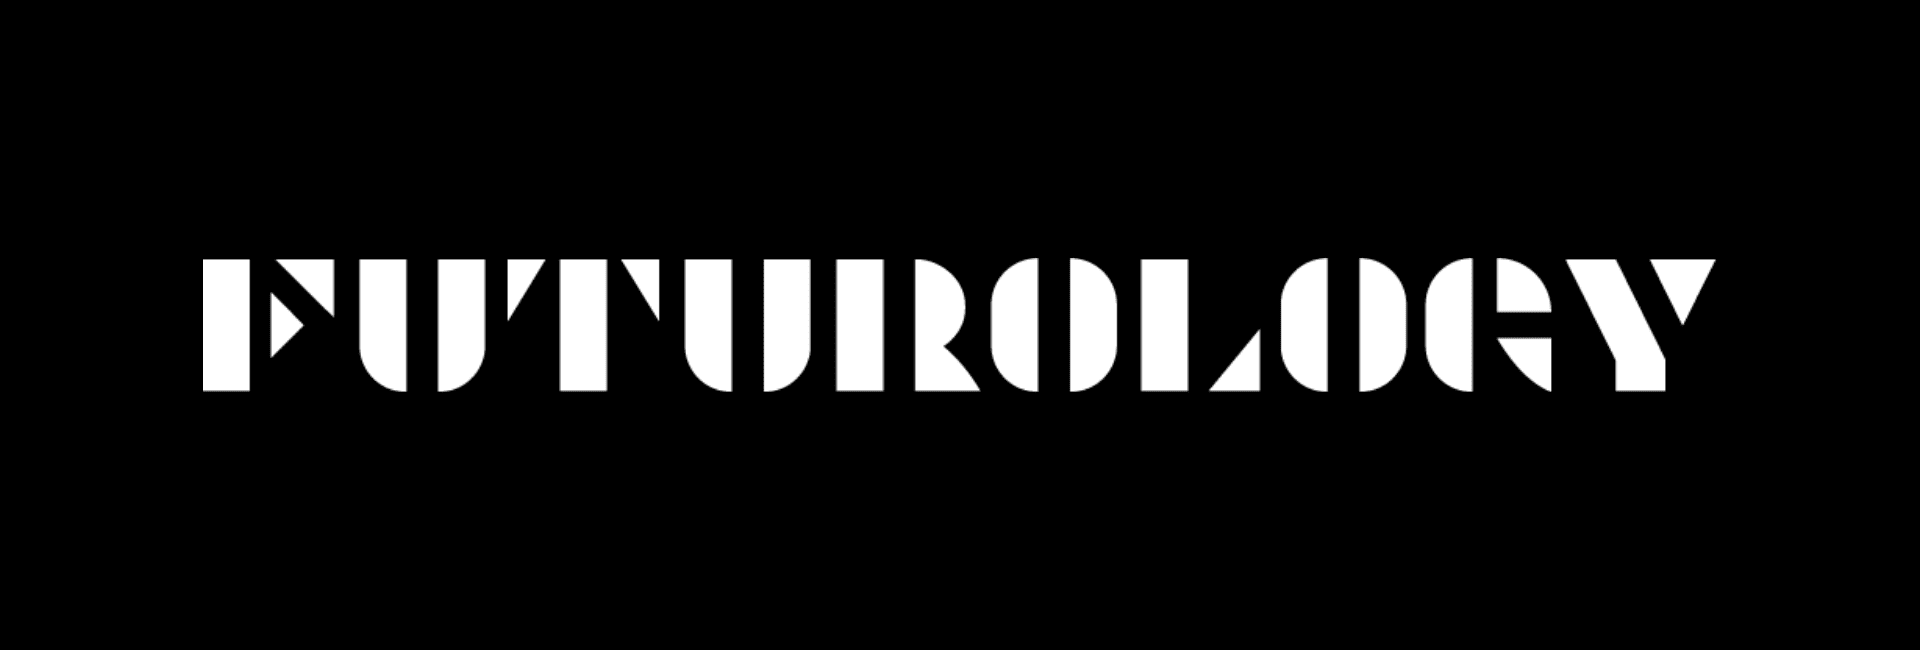 Futurology Logo